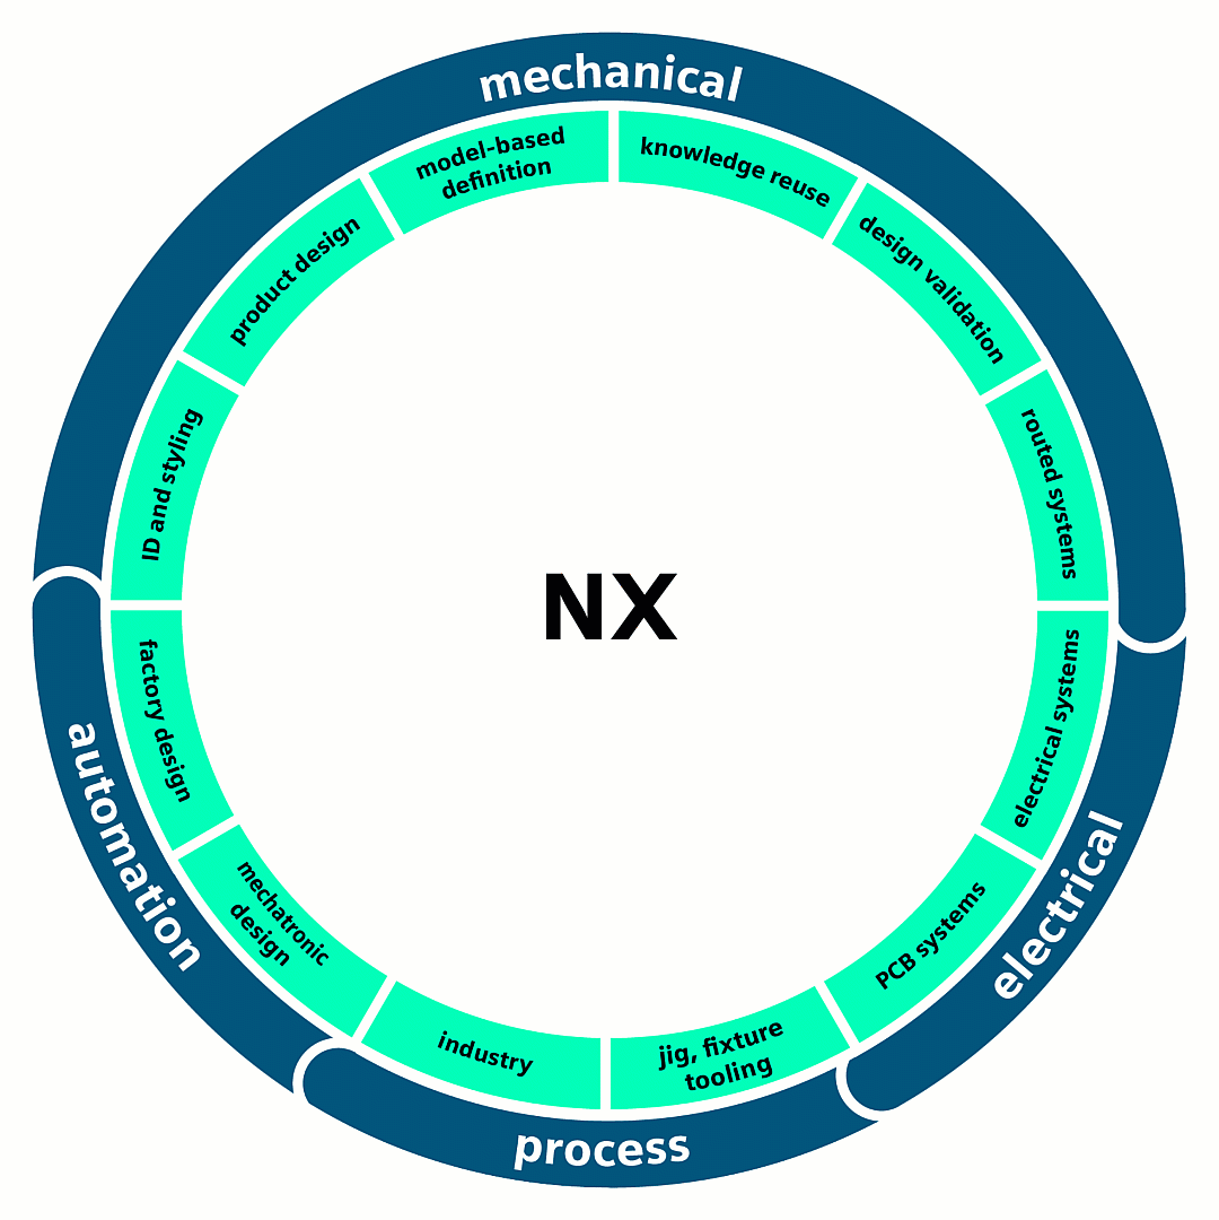 Academic NX